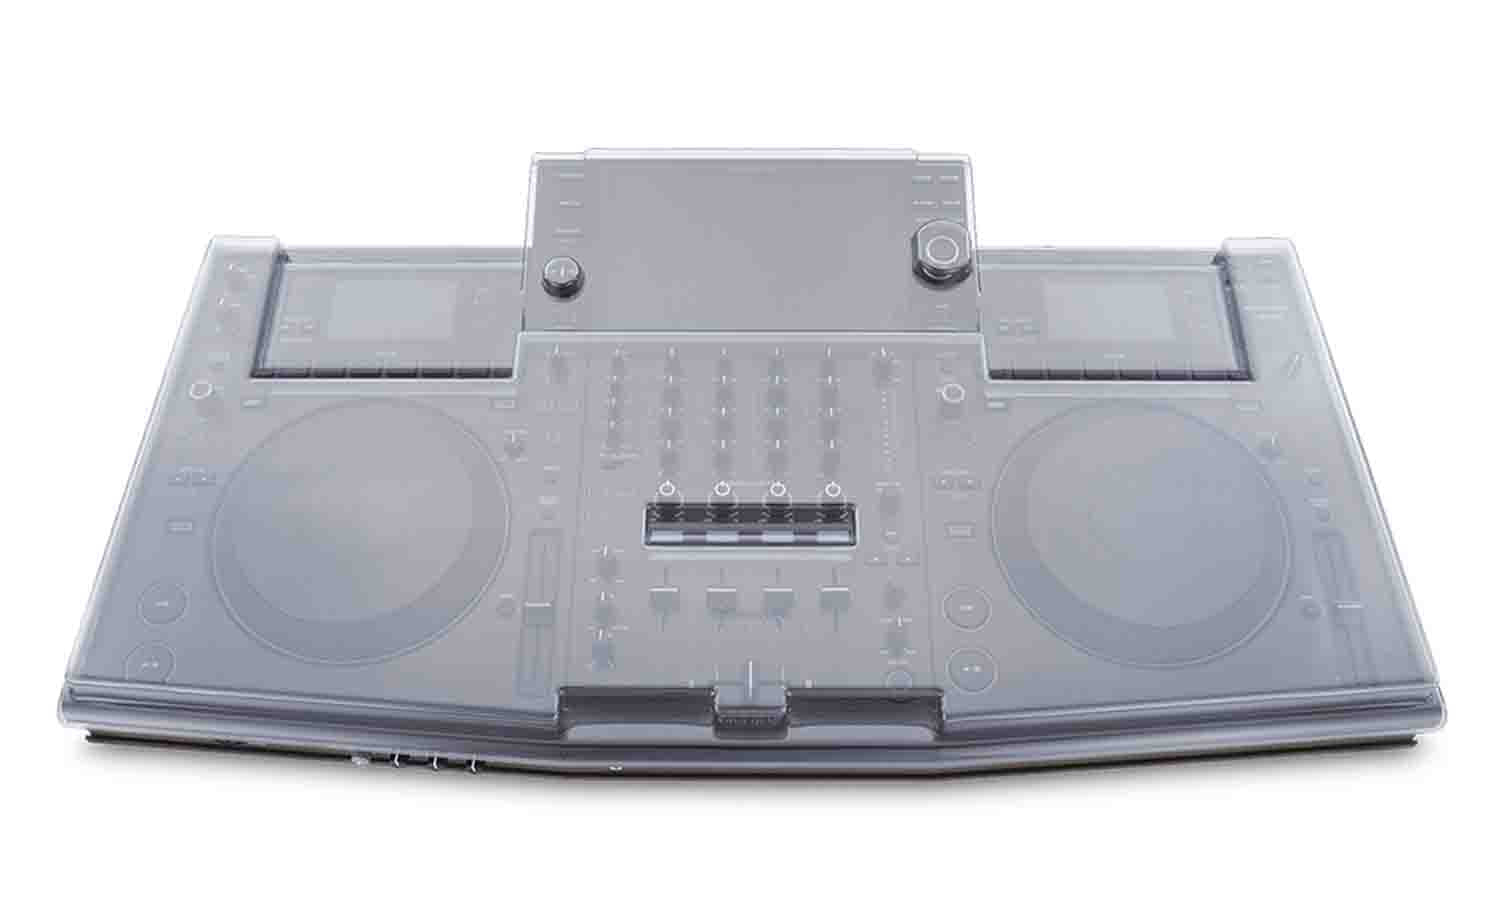 B-Stock: Decksaver DS-PC-OPUSQUAD Protection Cover for Pioneer DJ OPUS-QUAD DJ Controller by Decksaver